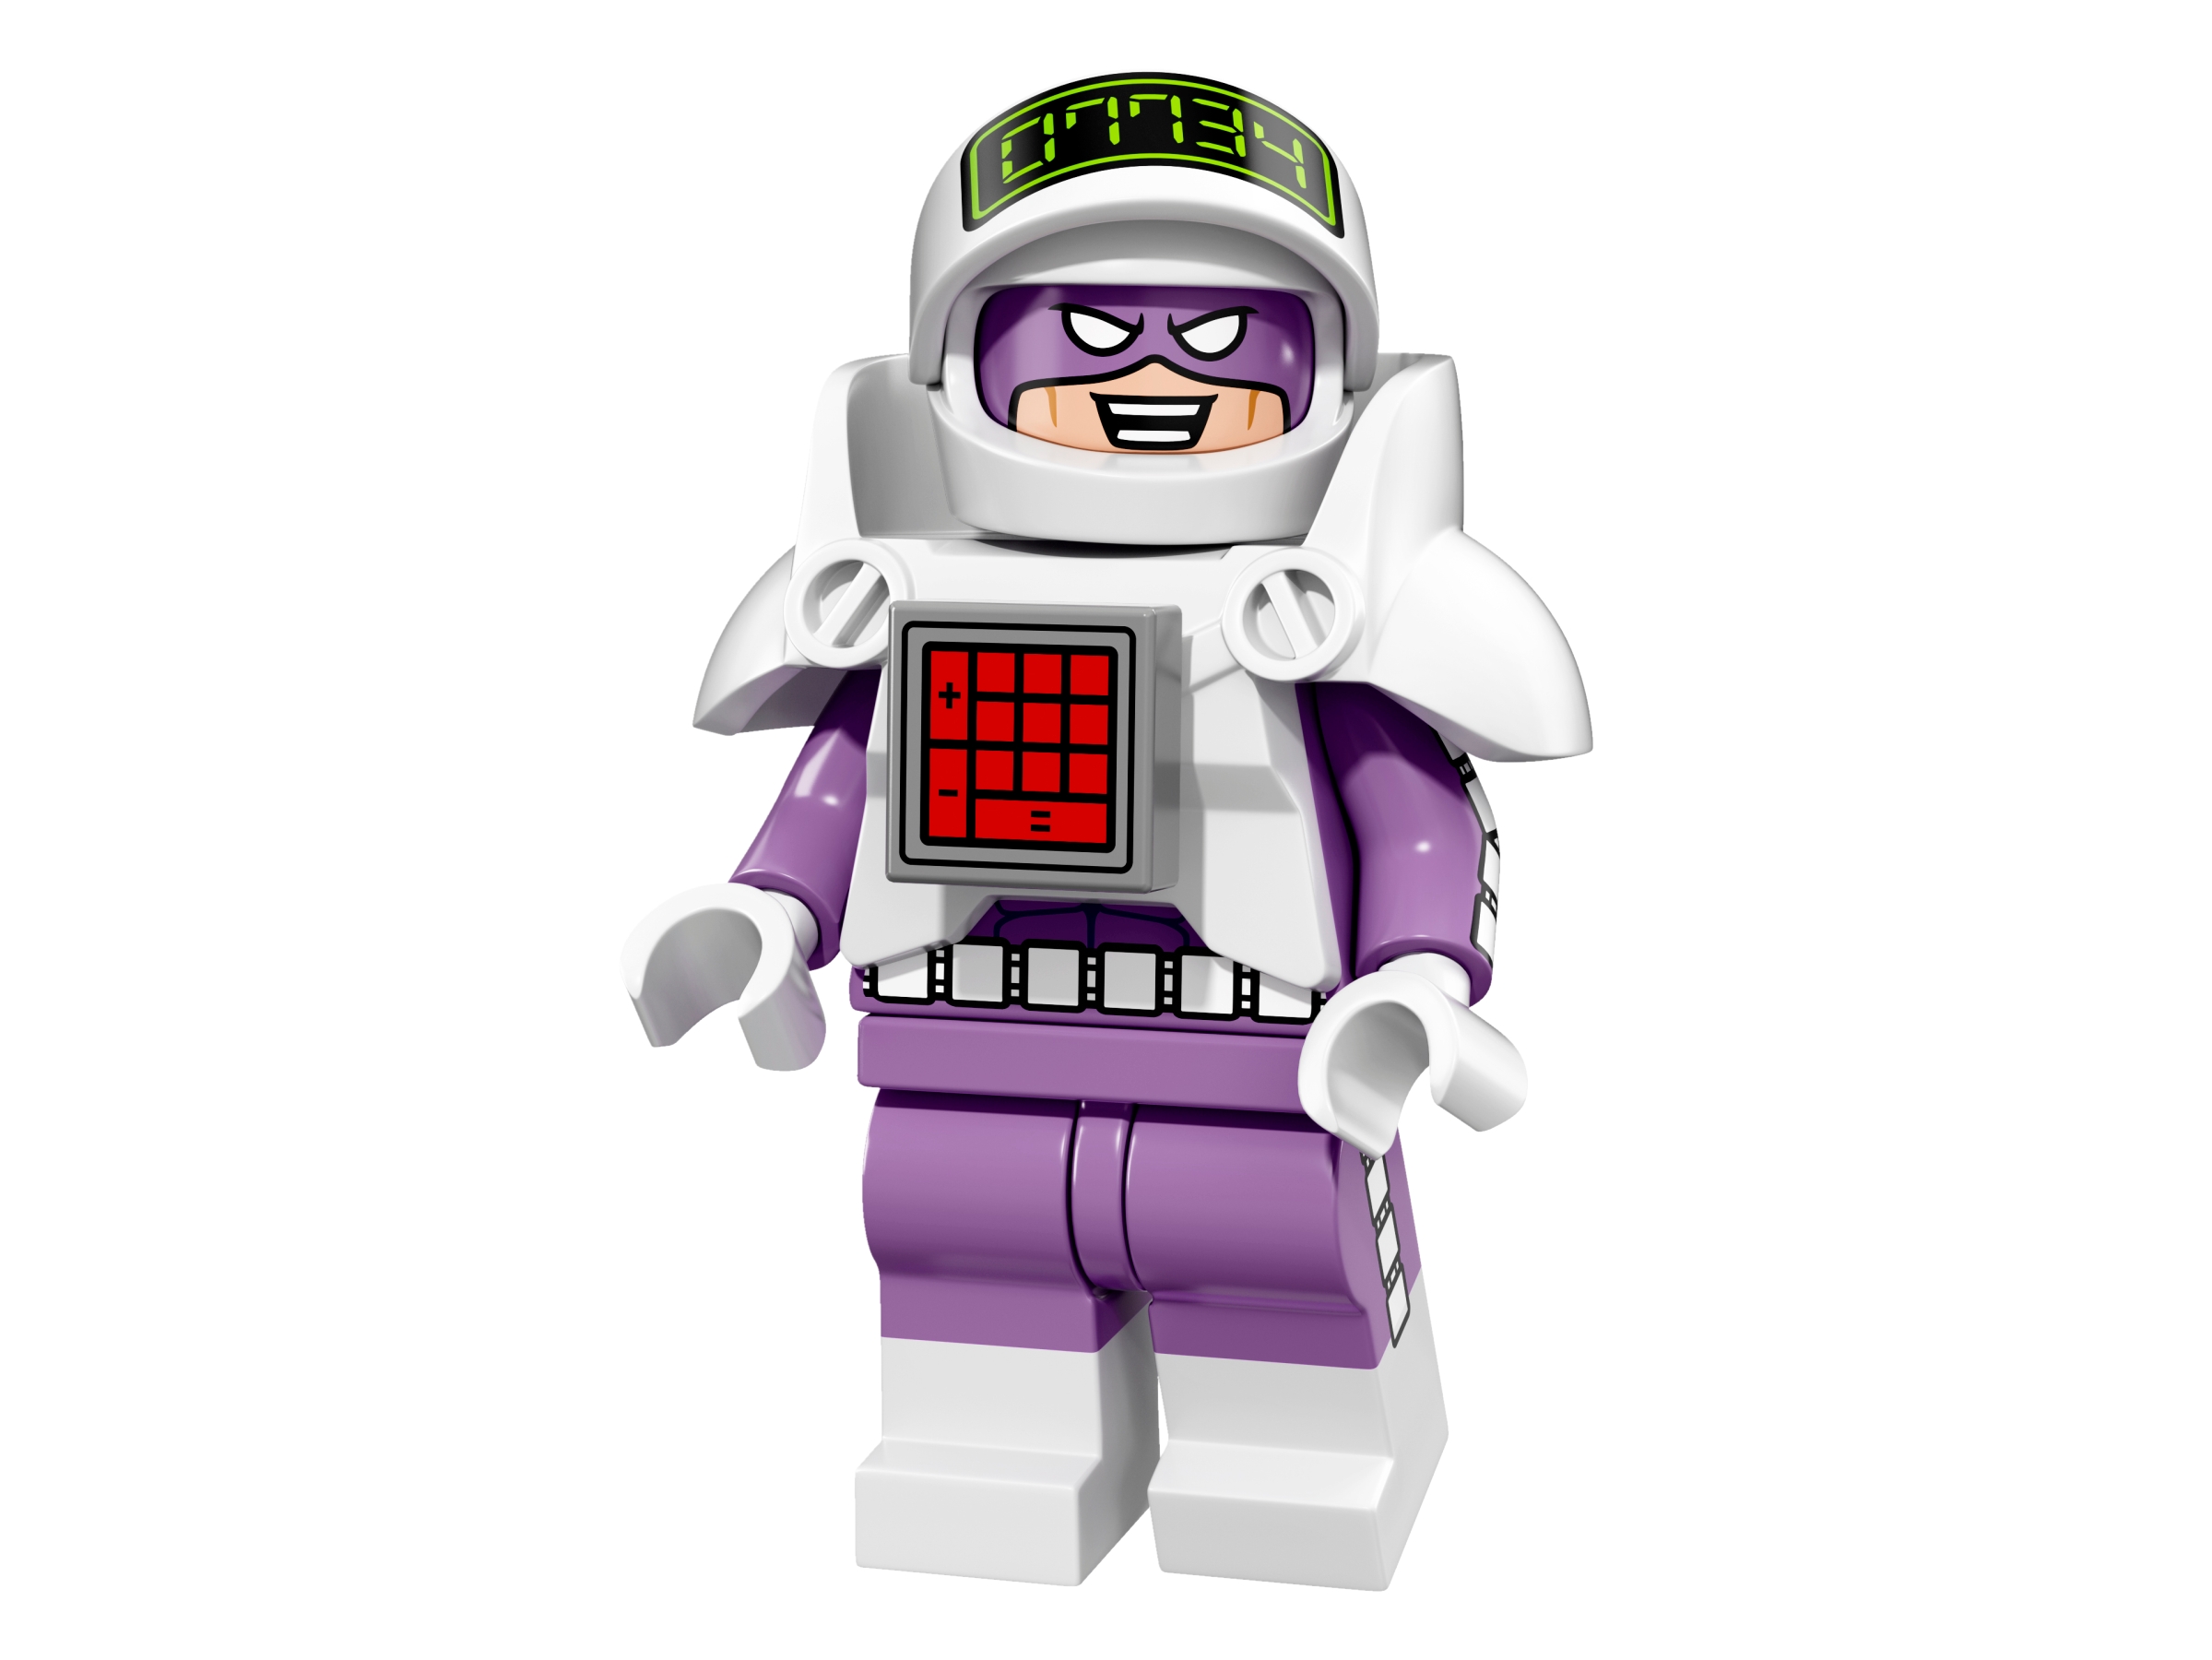 LEGO BATMAN MOVIE SERIES Complete Set-20 MINIFIGS collectible minifigures 71017 